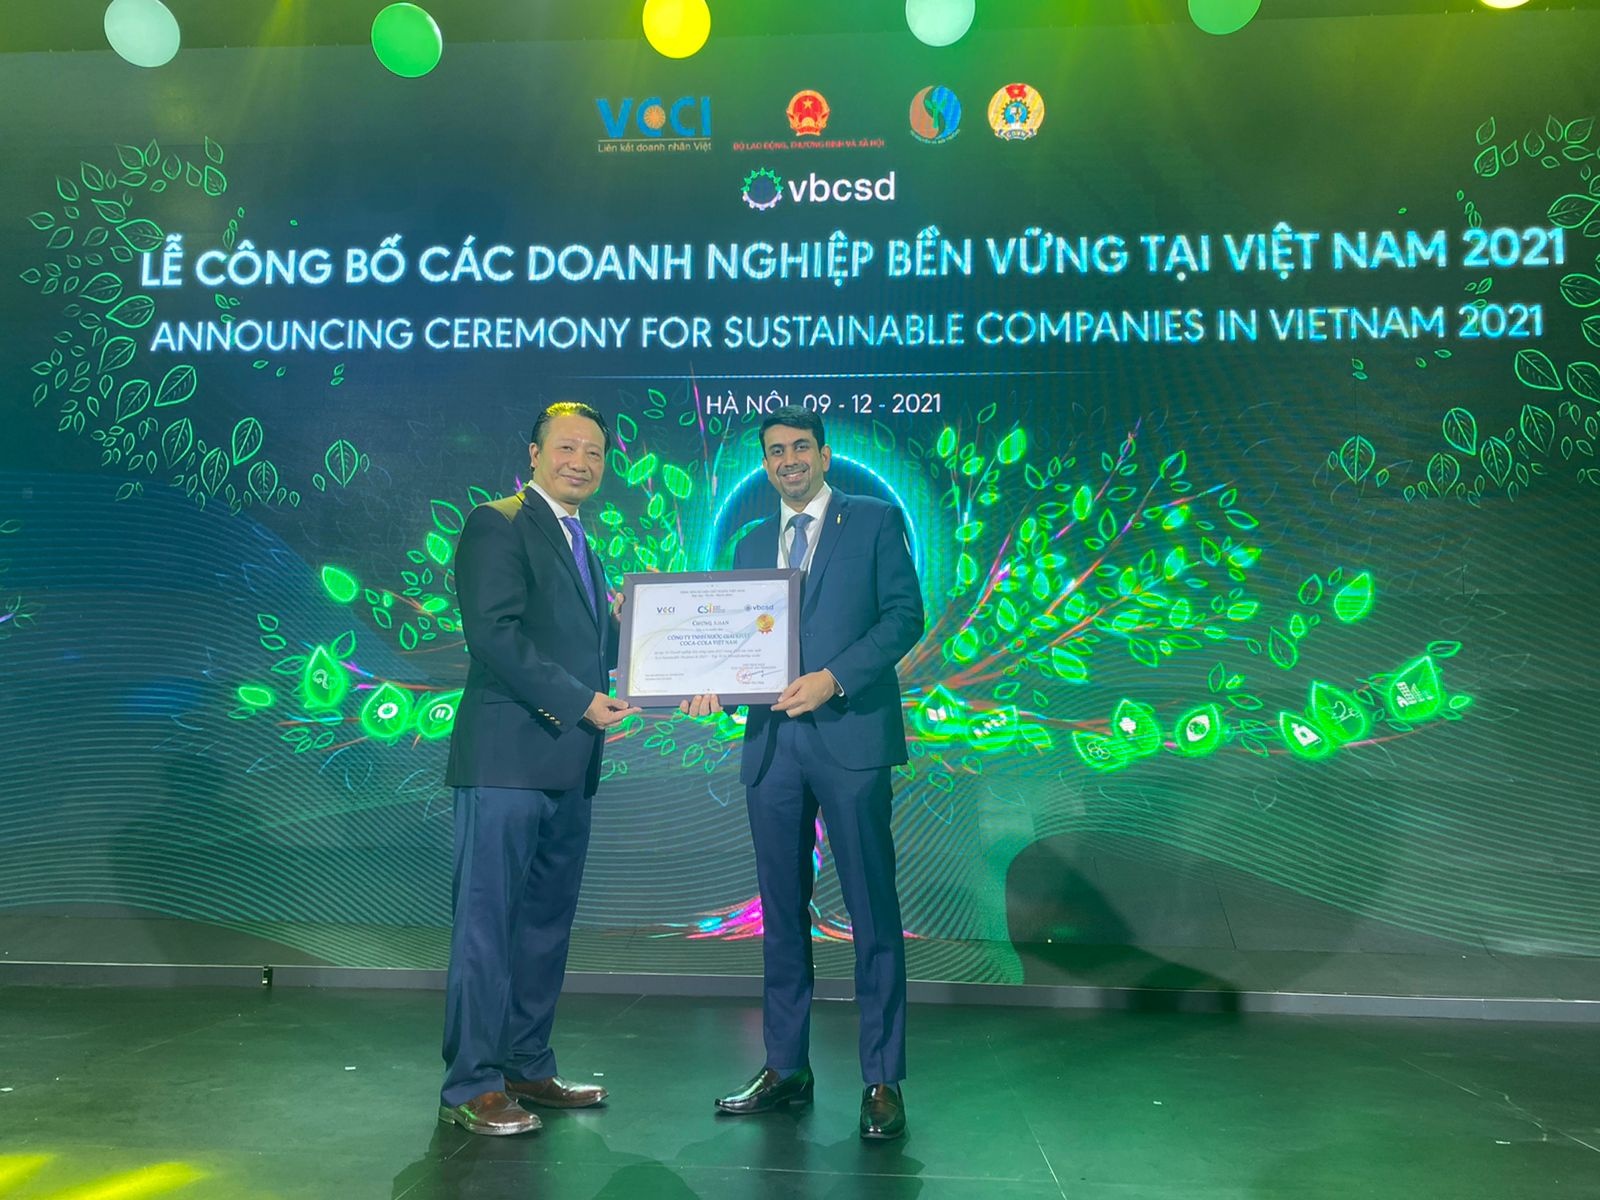 Coca-Cola honoured in top 3 most sustainable companies in Vietnam